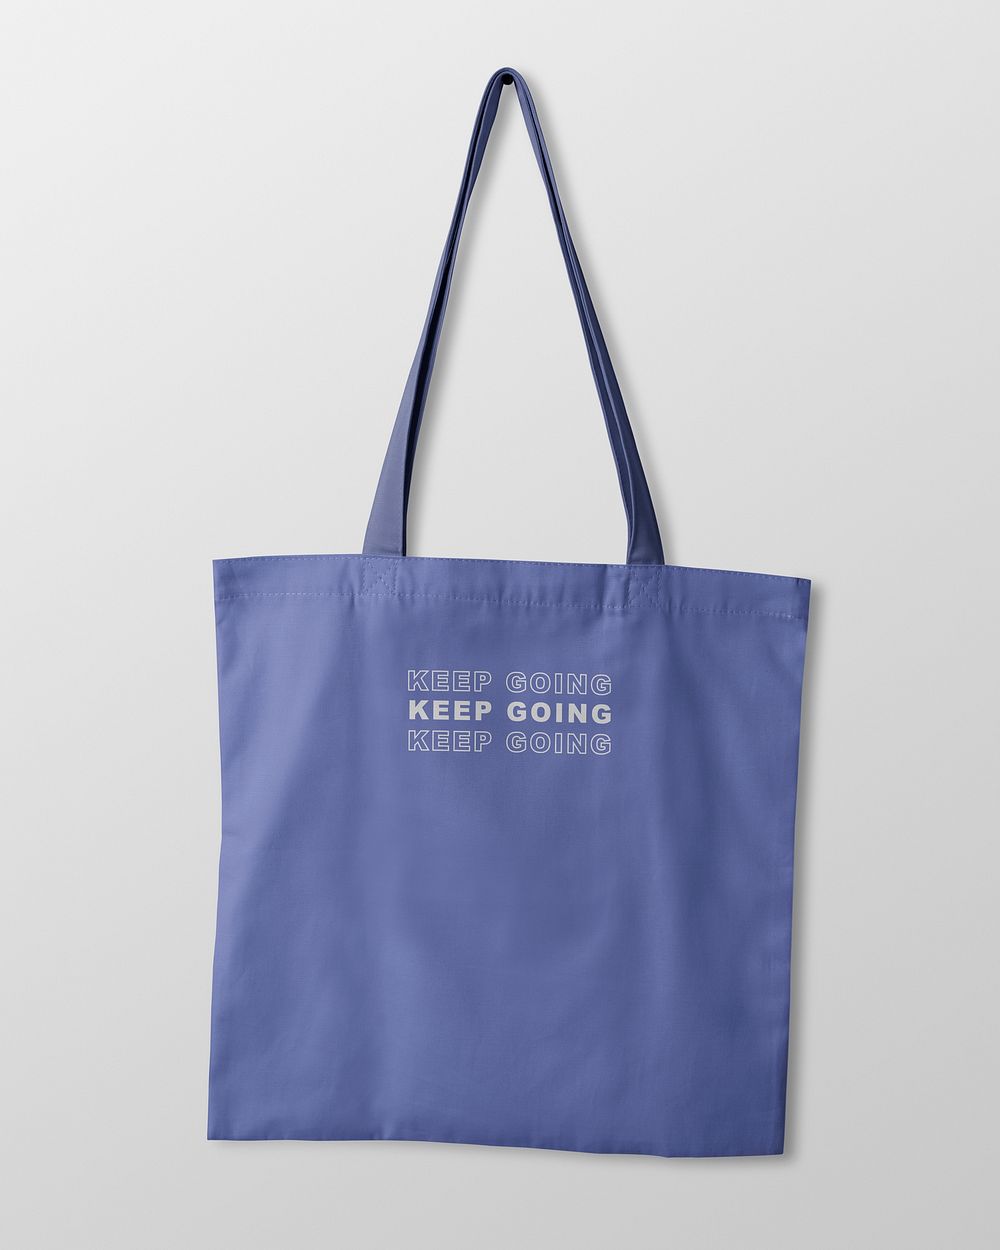 Canvas tote bag mockup,  printed quote, realistic design psd